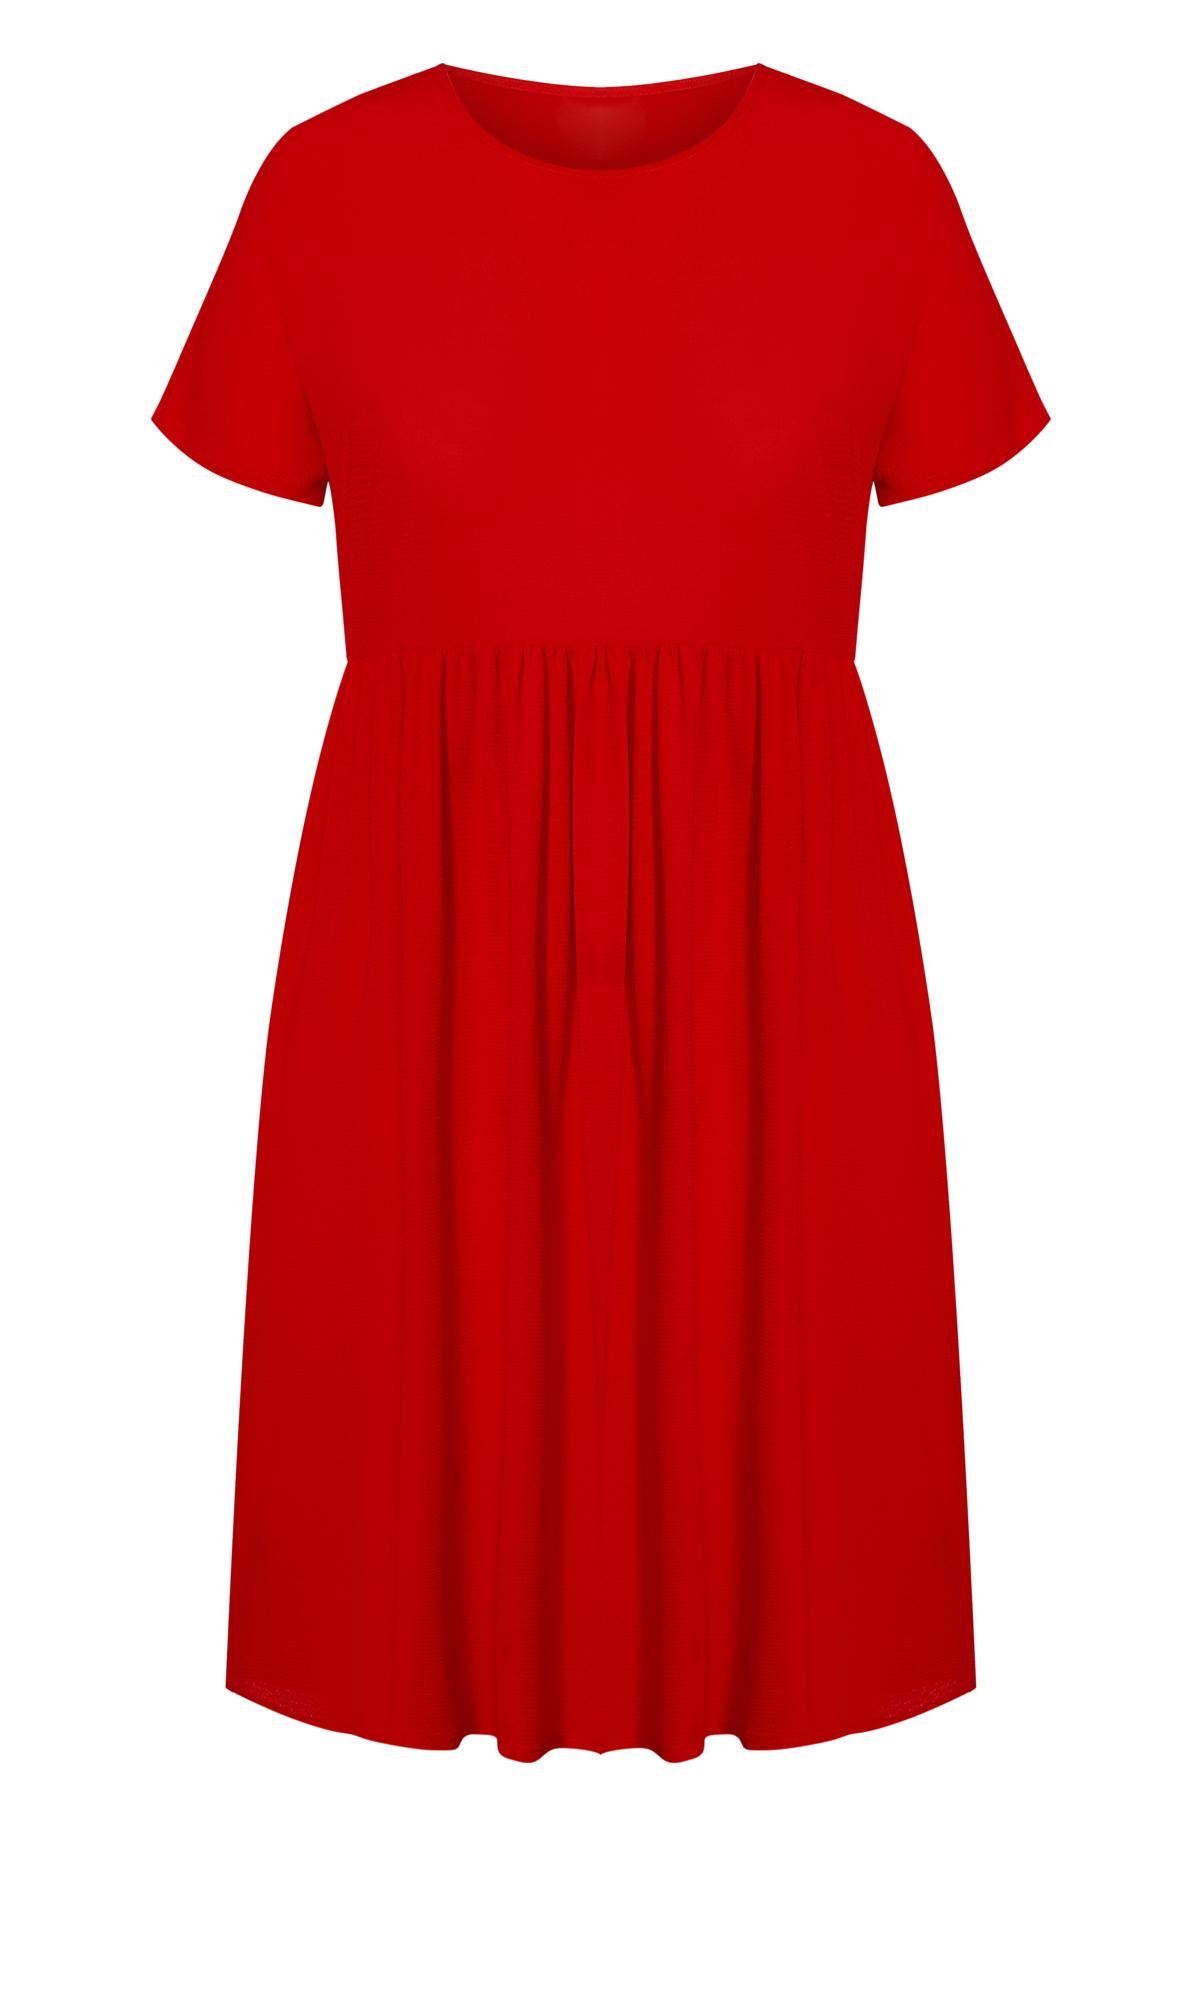 Doll Up Plain Red Dress 3